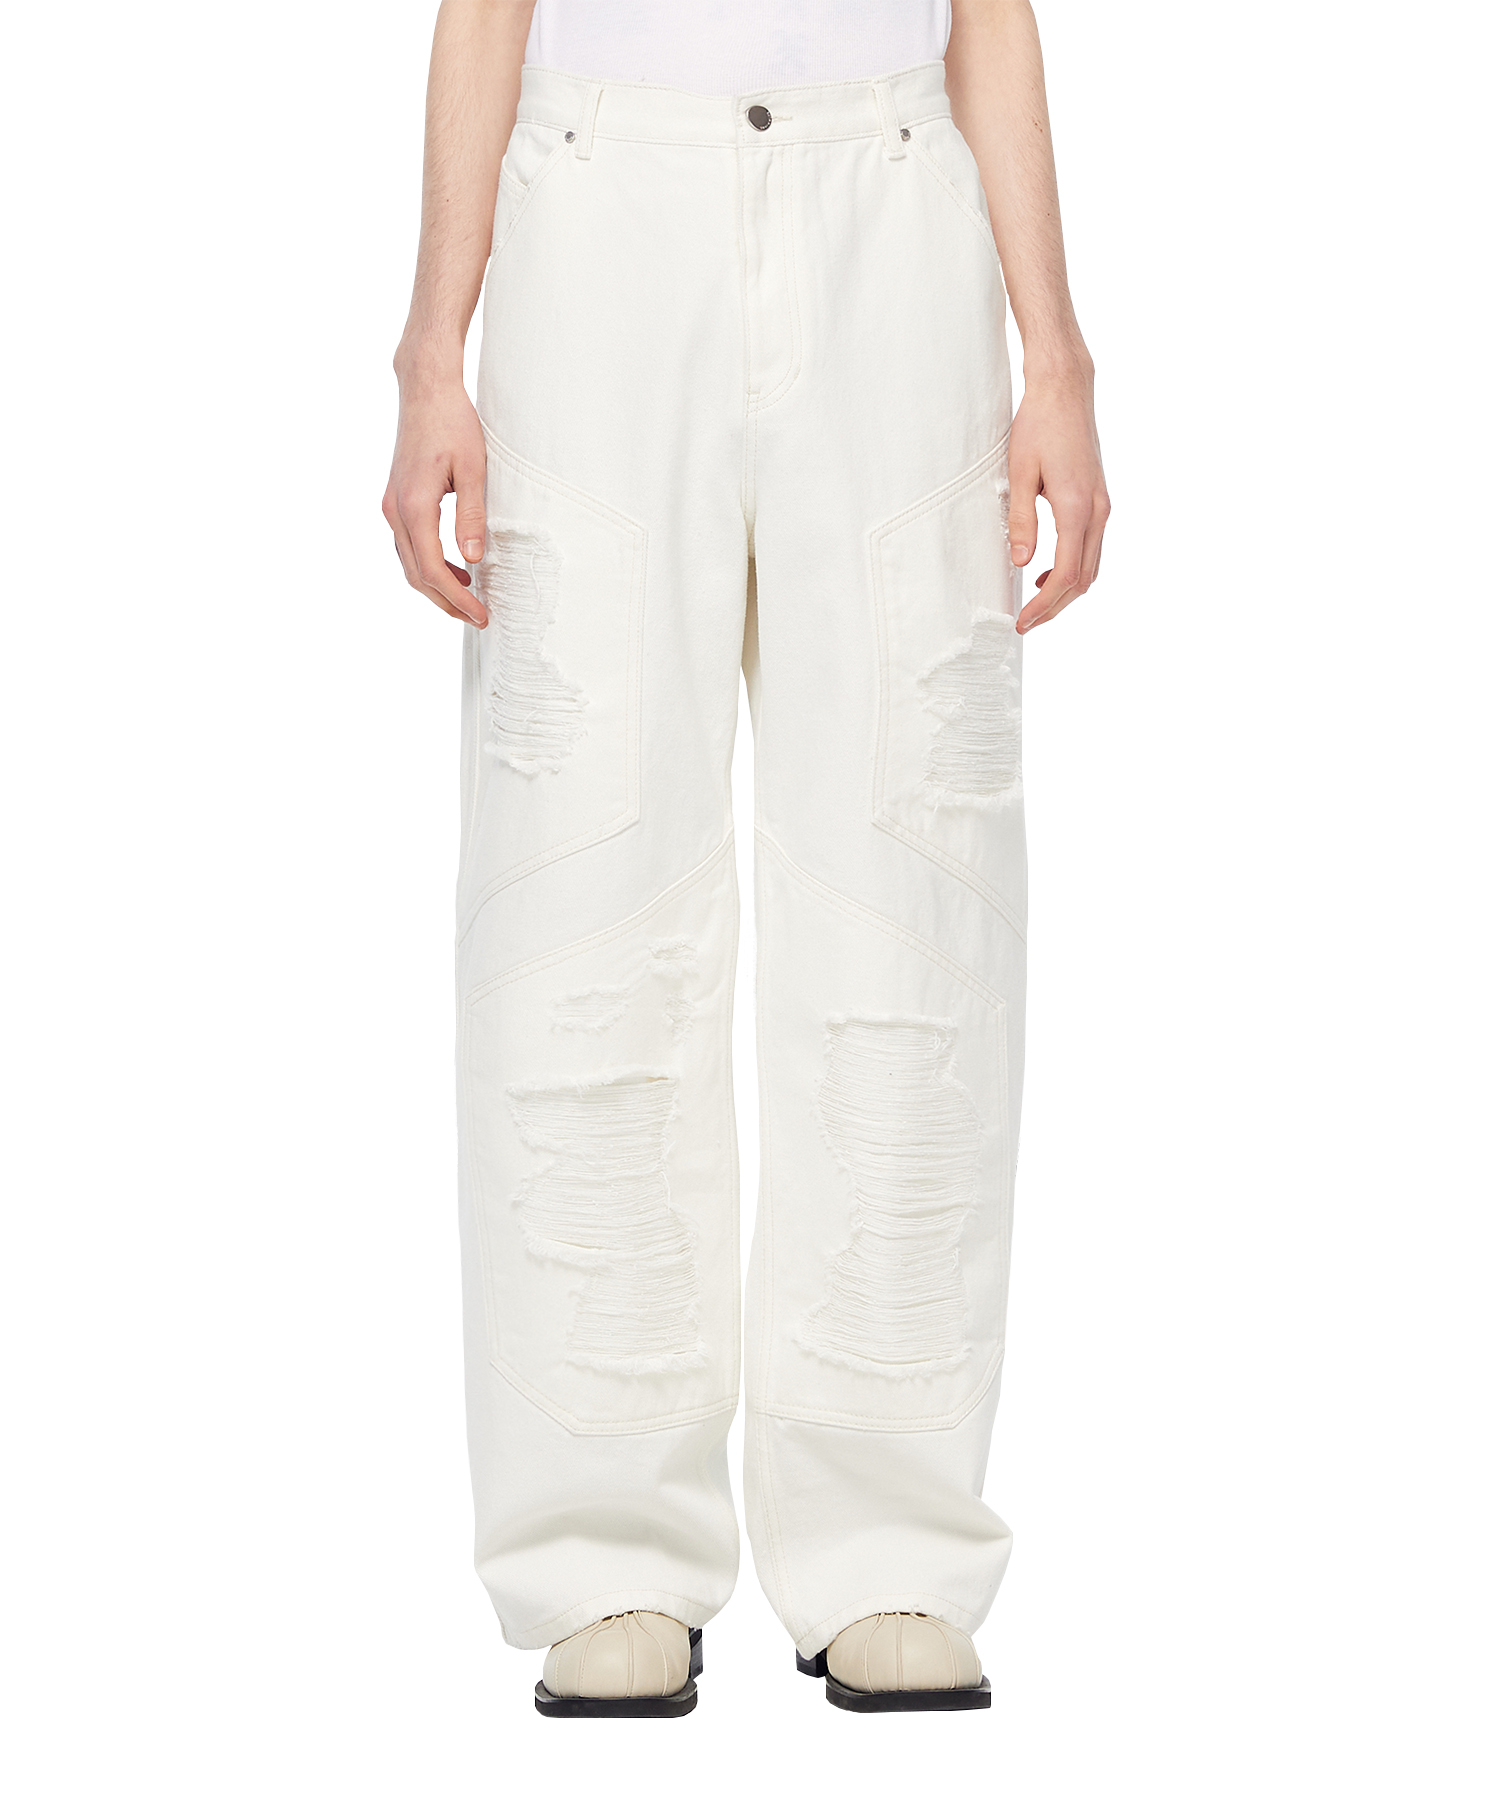 Destroyed Washed Denim Pants - White